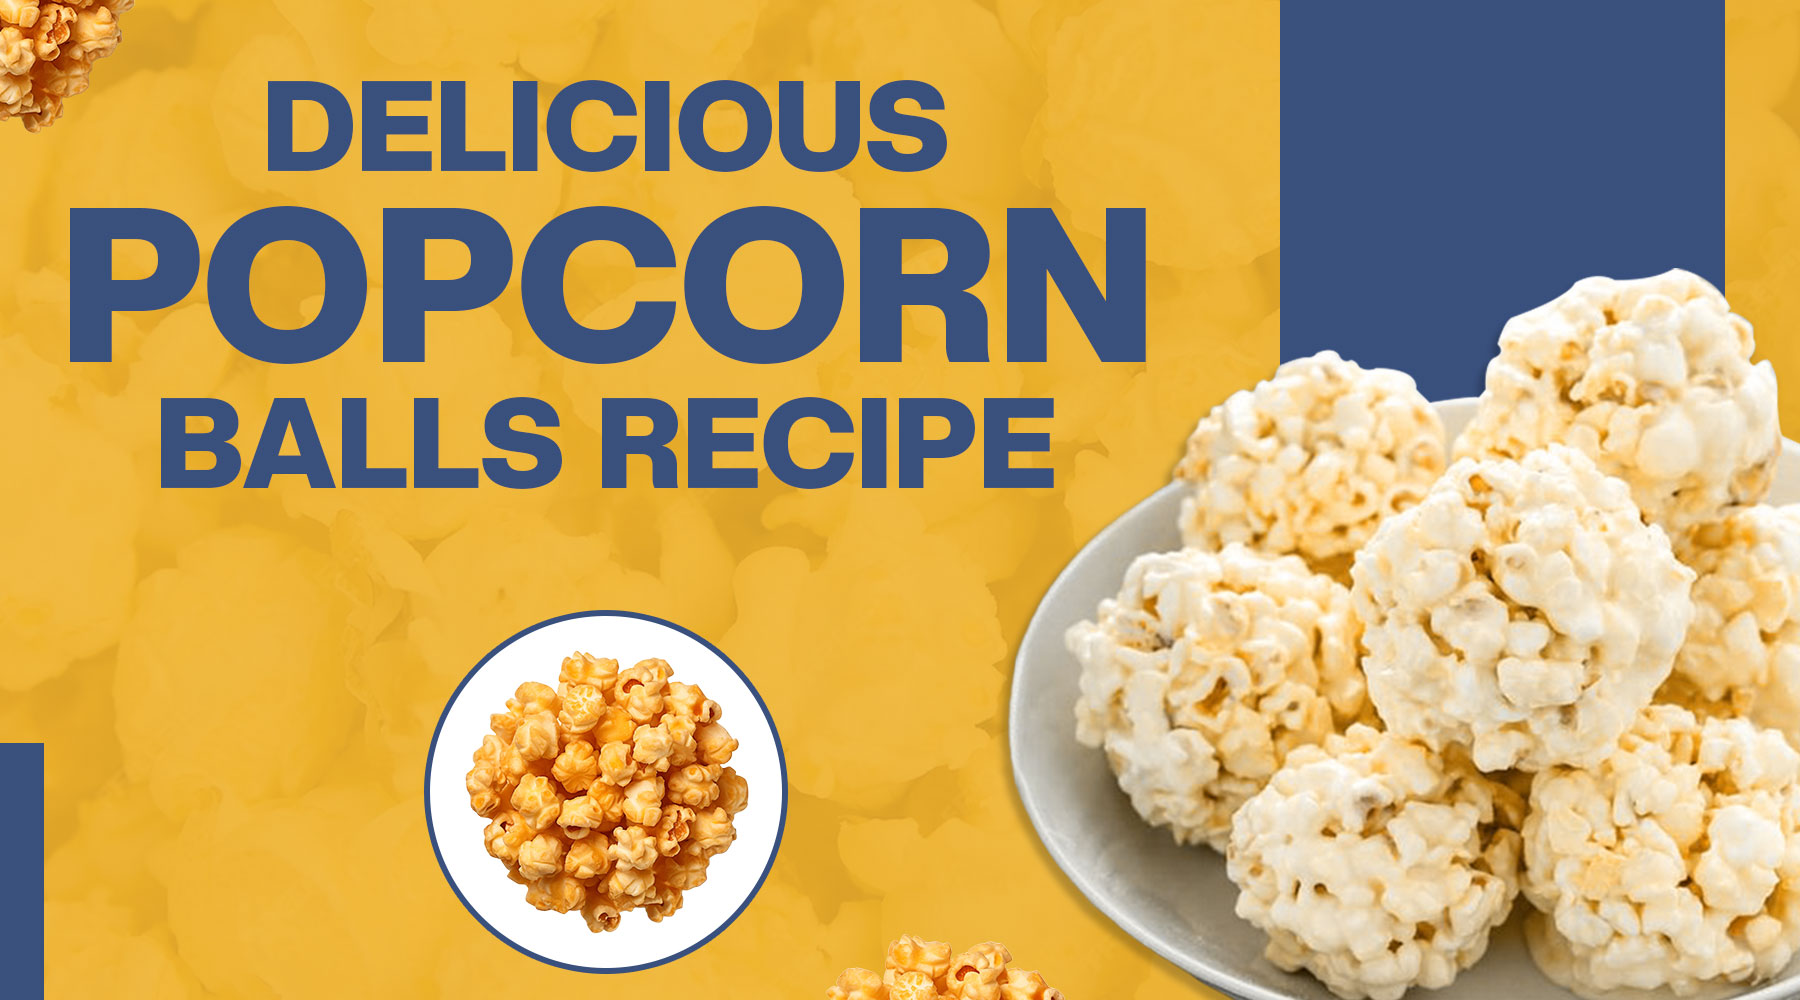 Delicious popcorn balls recipe